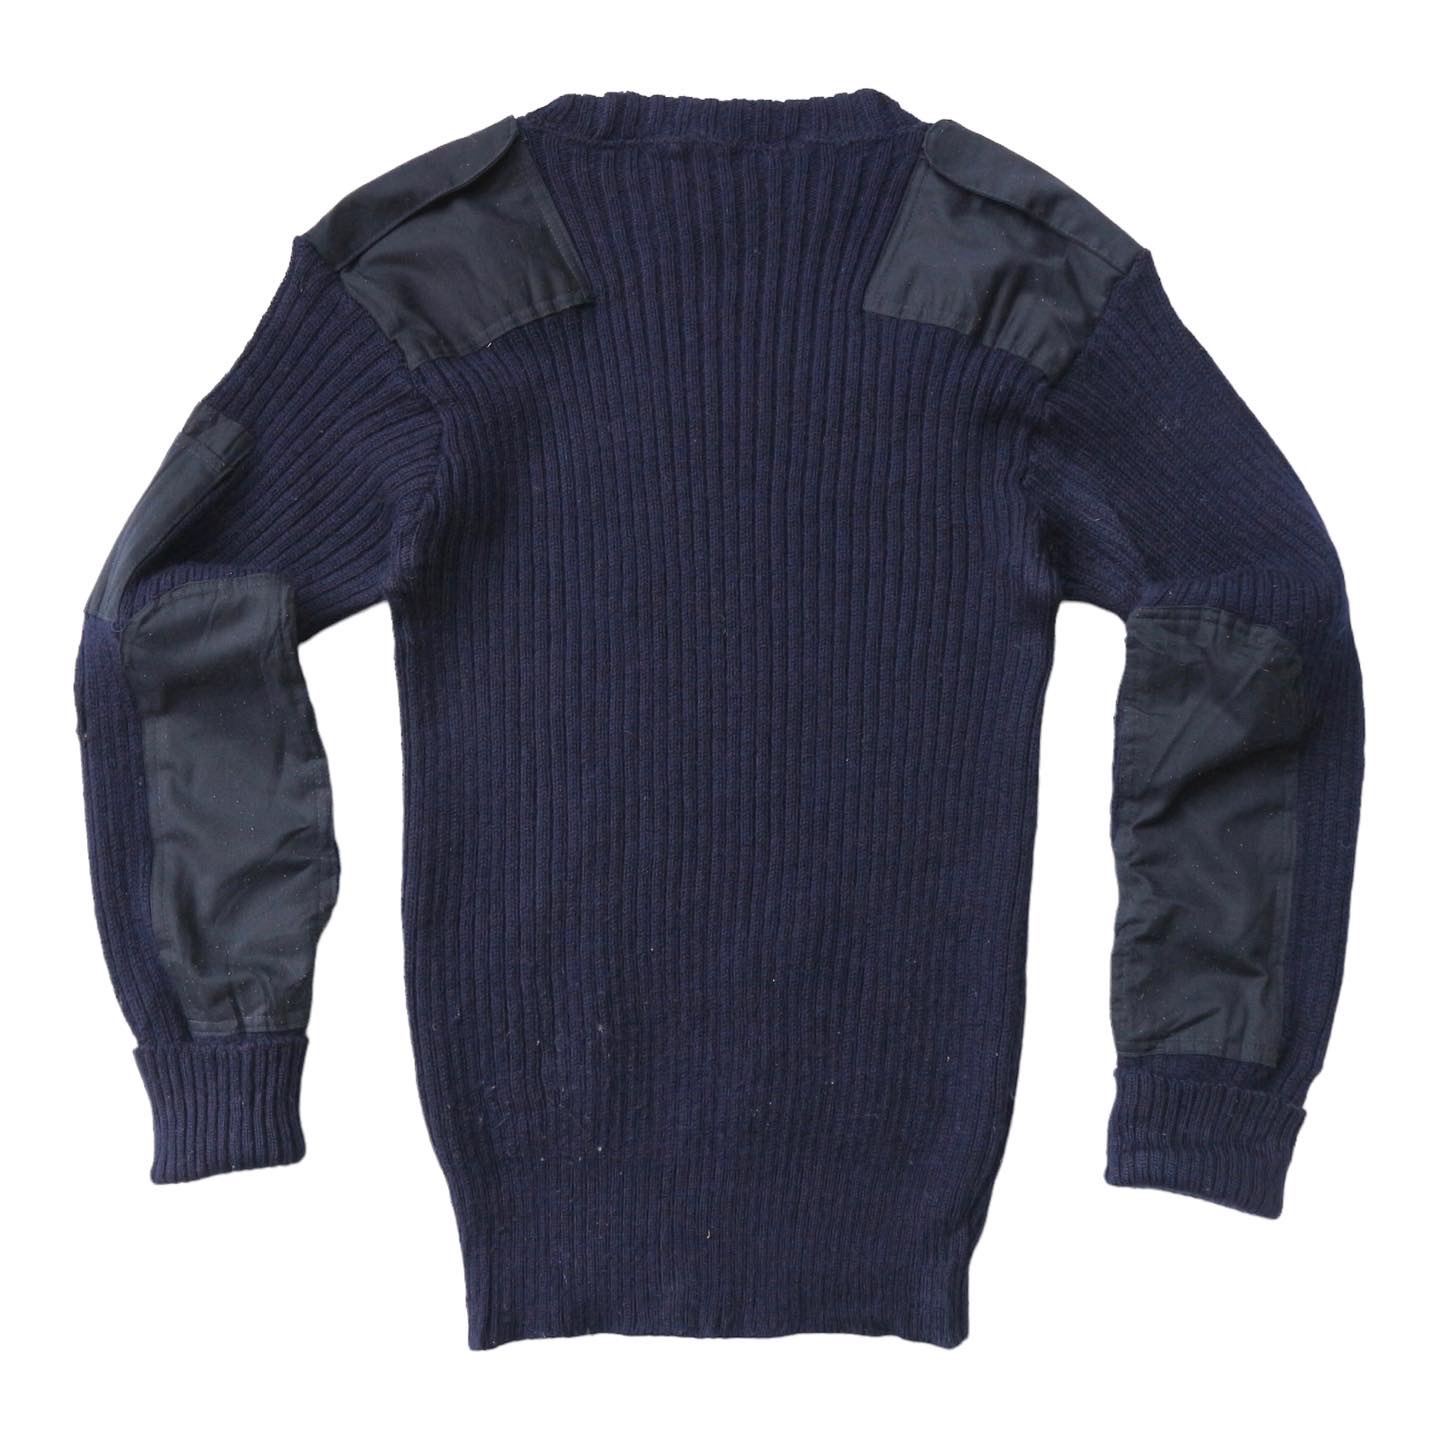 British Army Wool Combat Sweater Size M